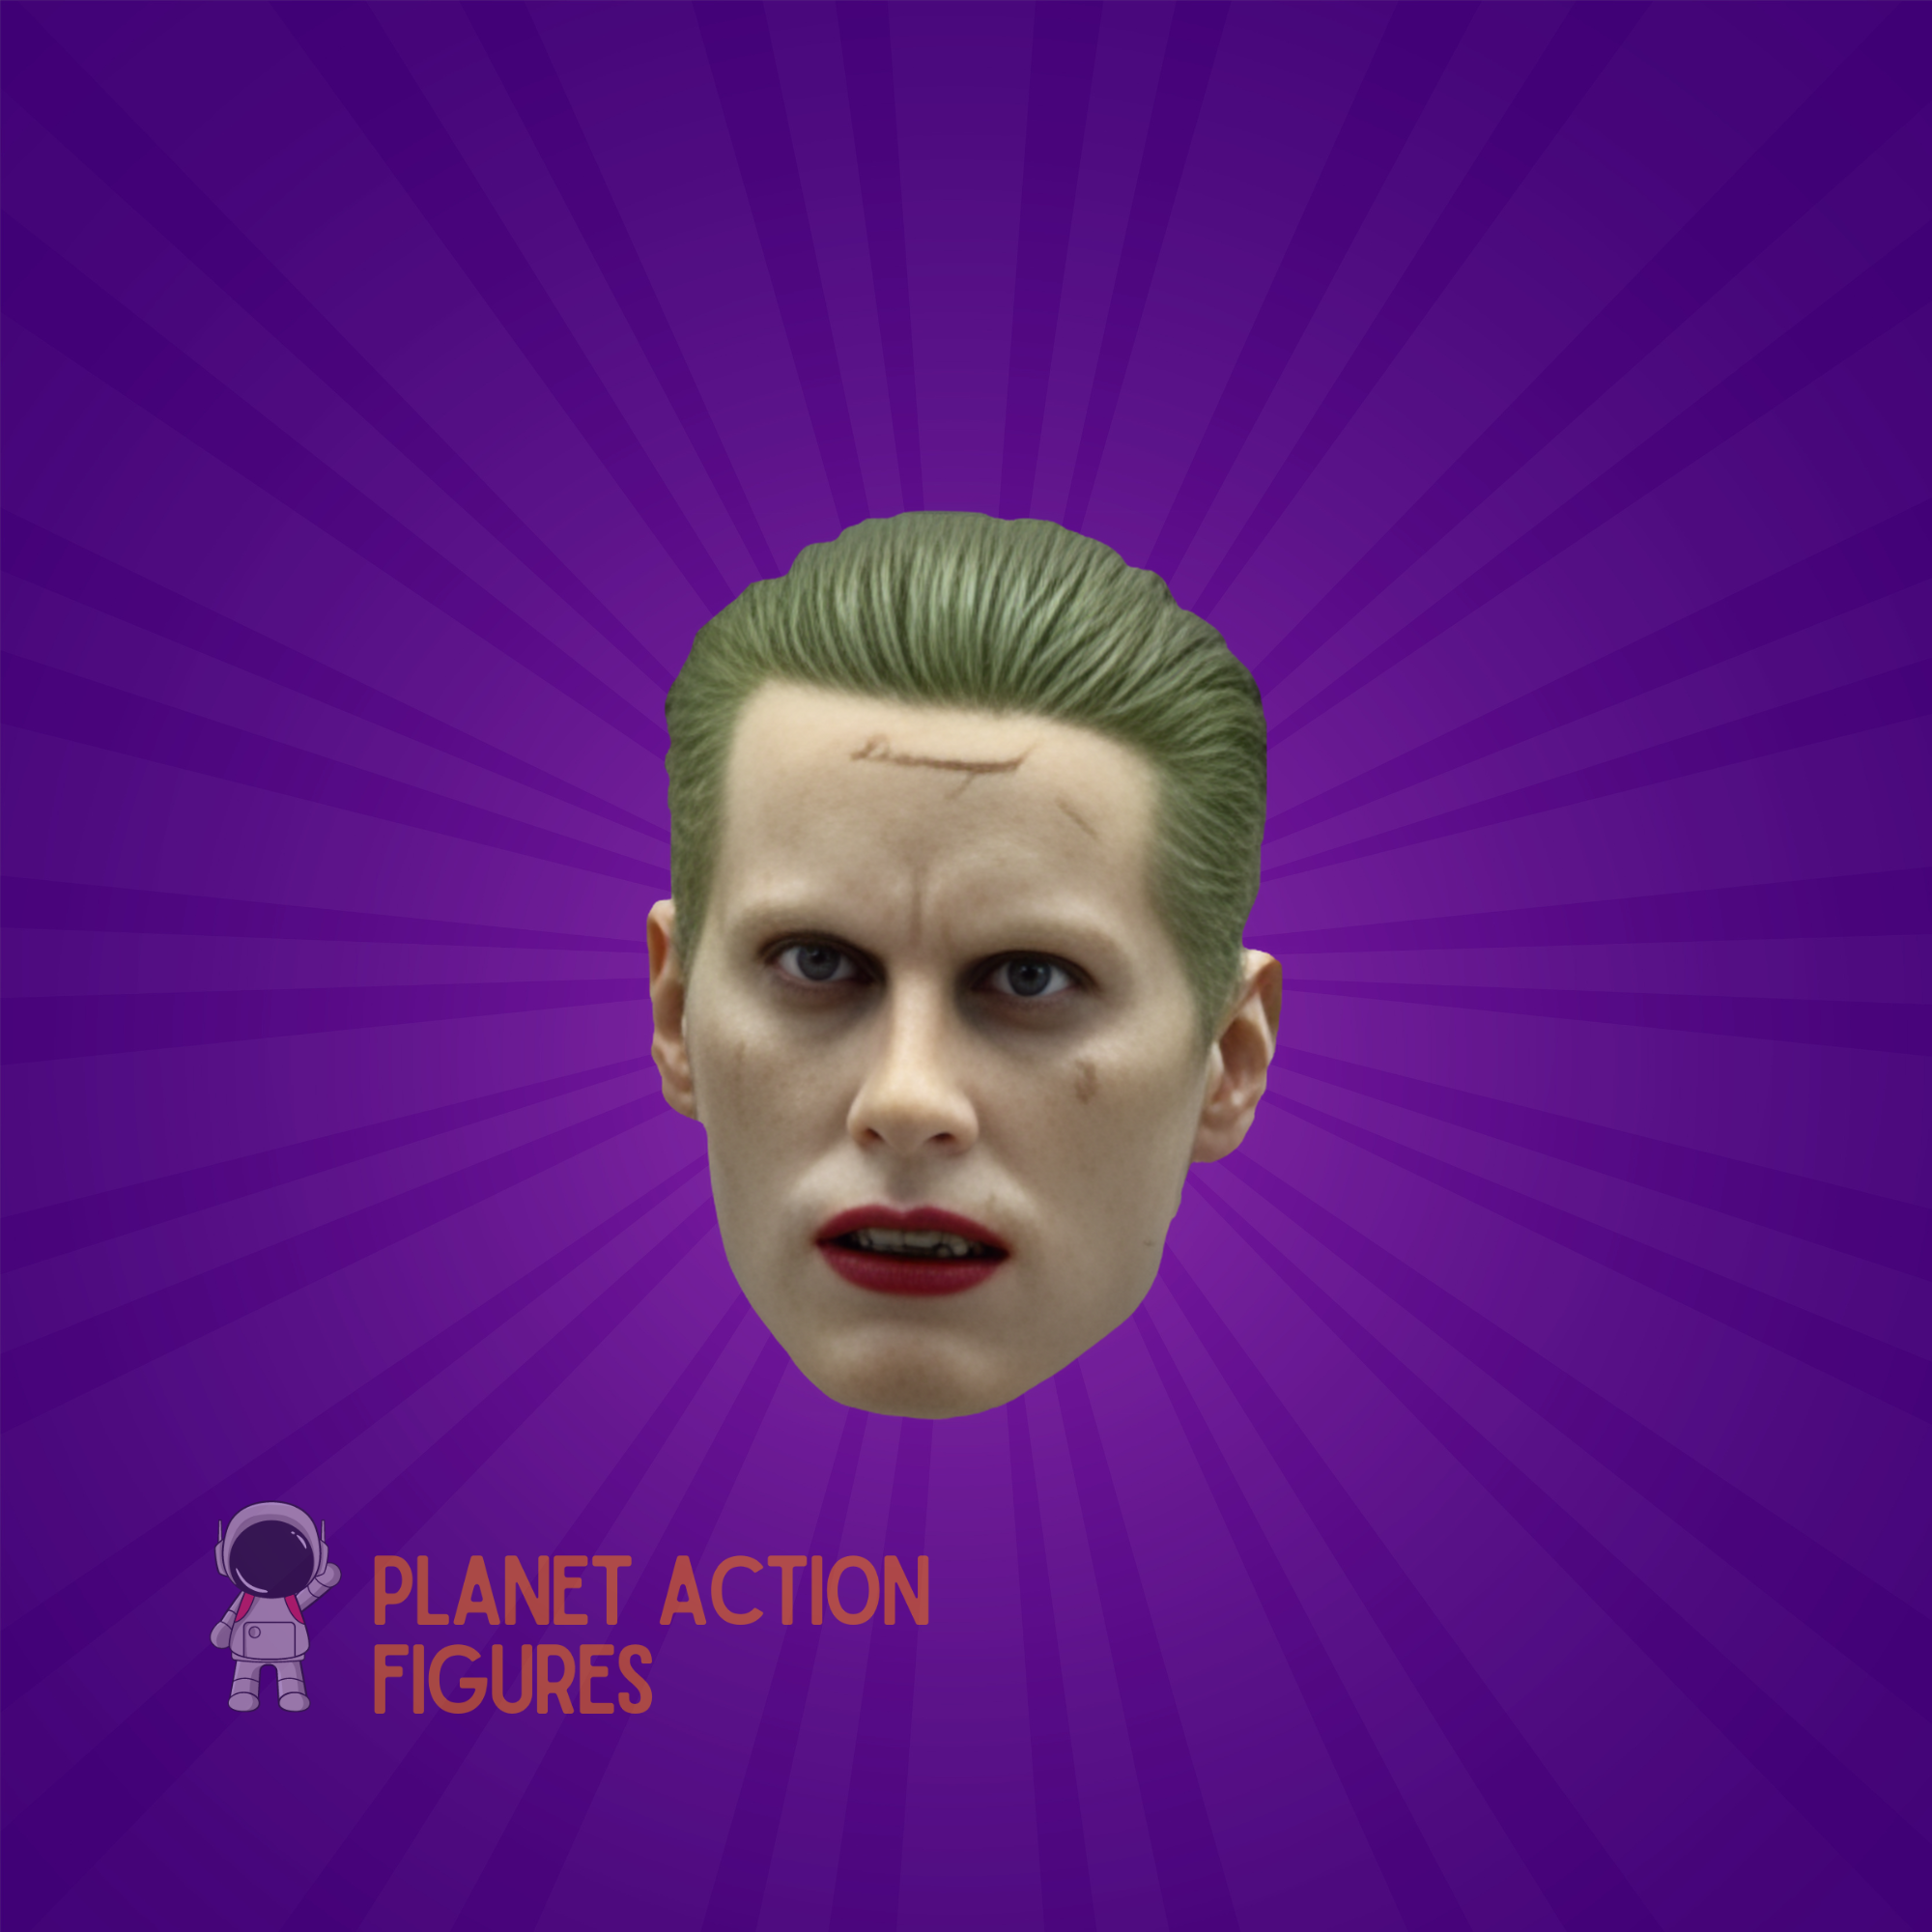 Headsculpt: Custom: The Joker Planet Action Figures